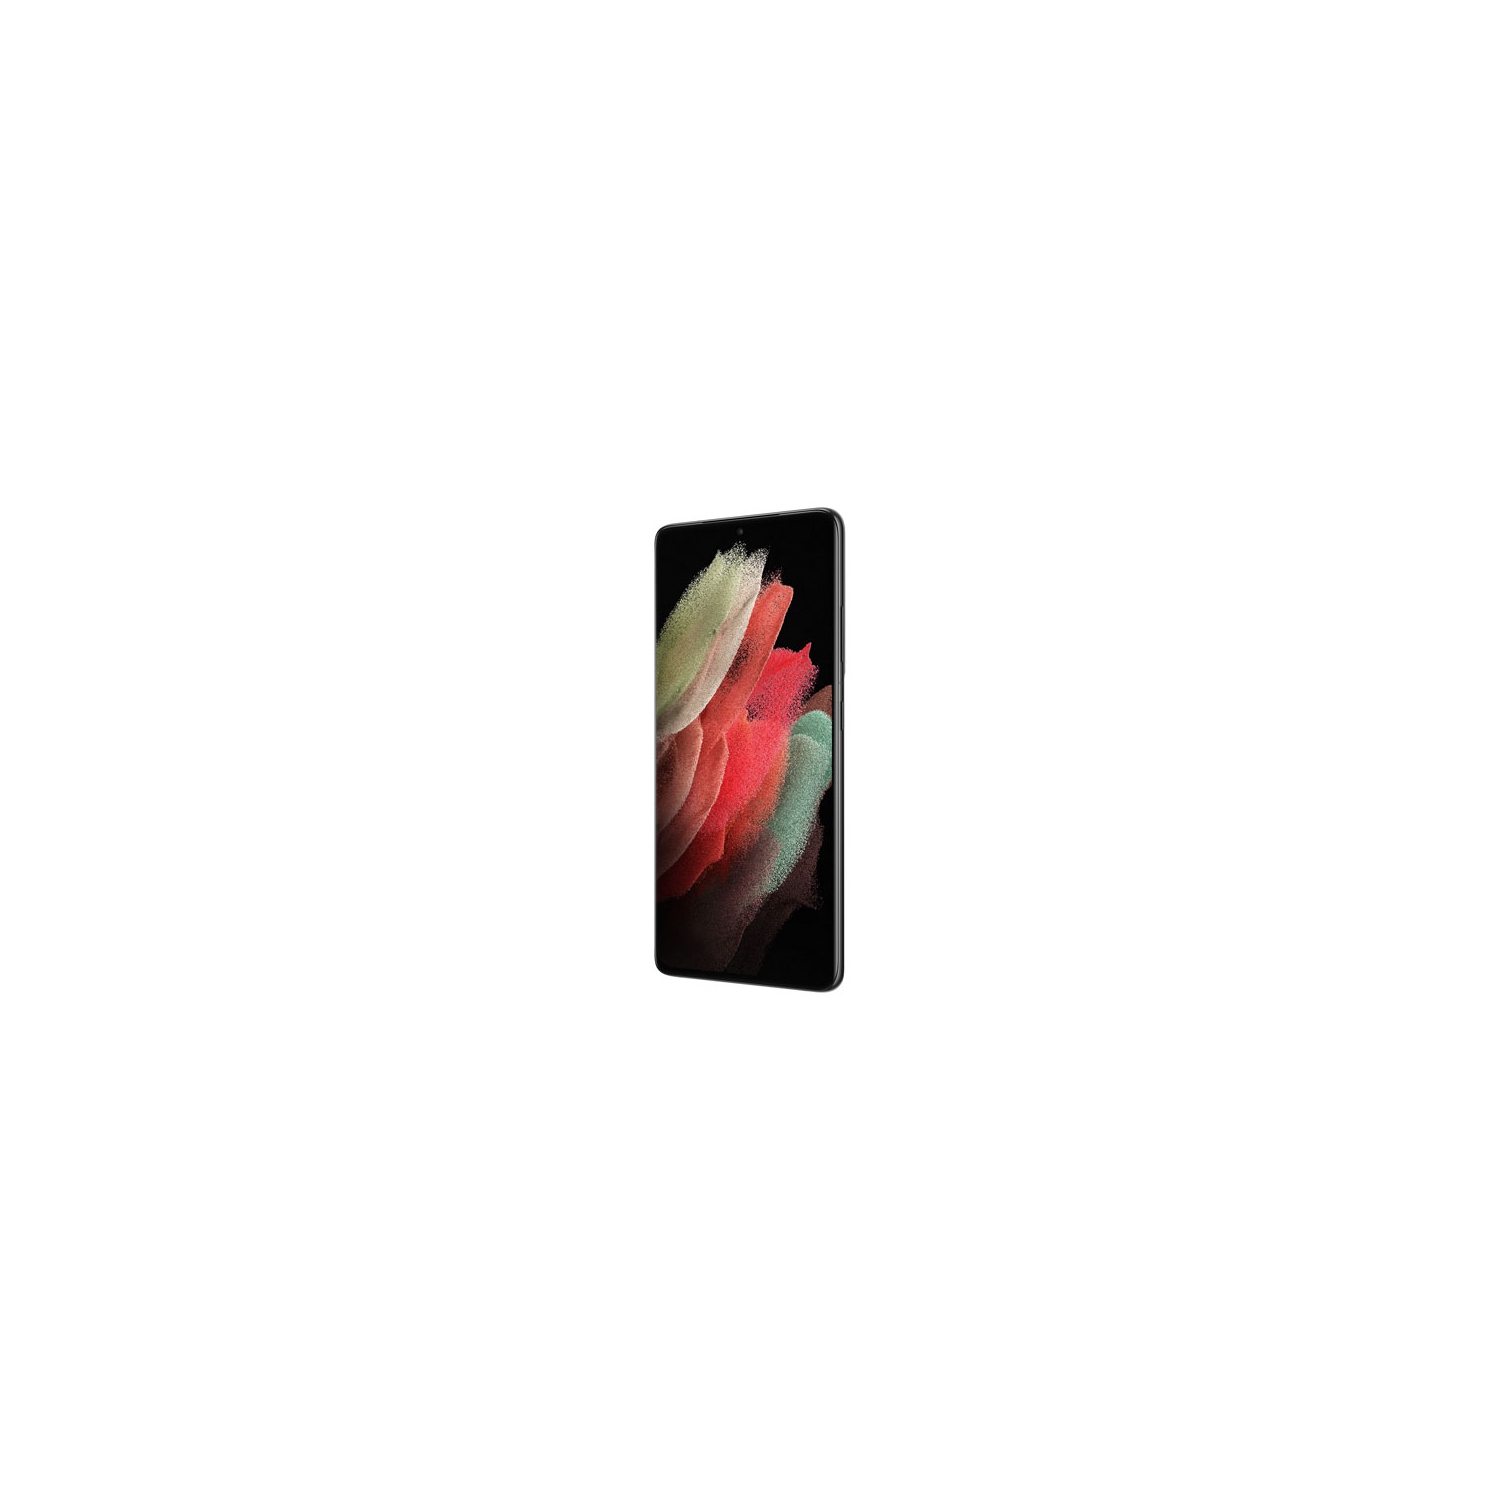 Refurbished (Fair) - Samsung Galaxy S21 Ultra 5G 256GB Smartphone - Phantom Black - Unlocked